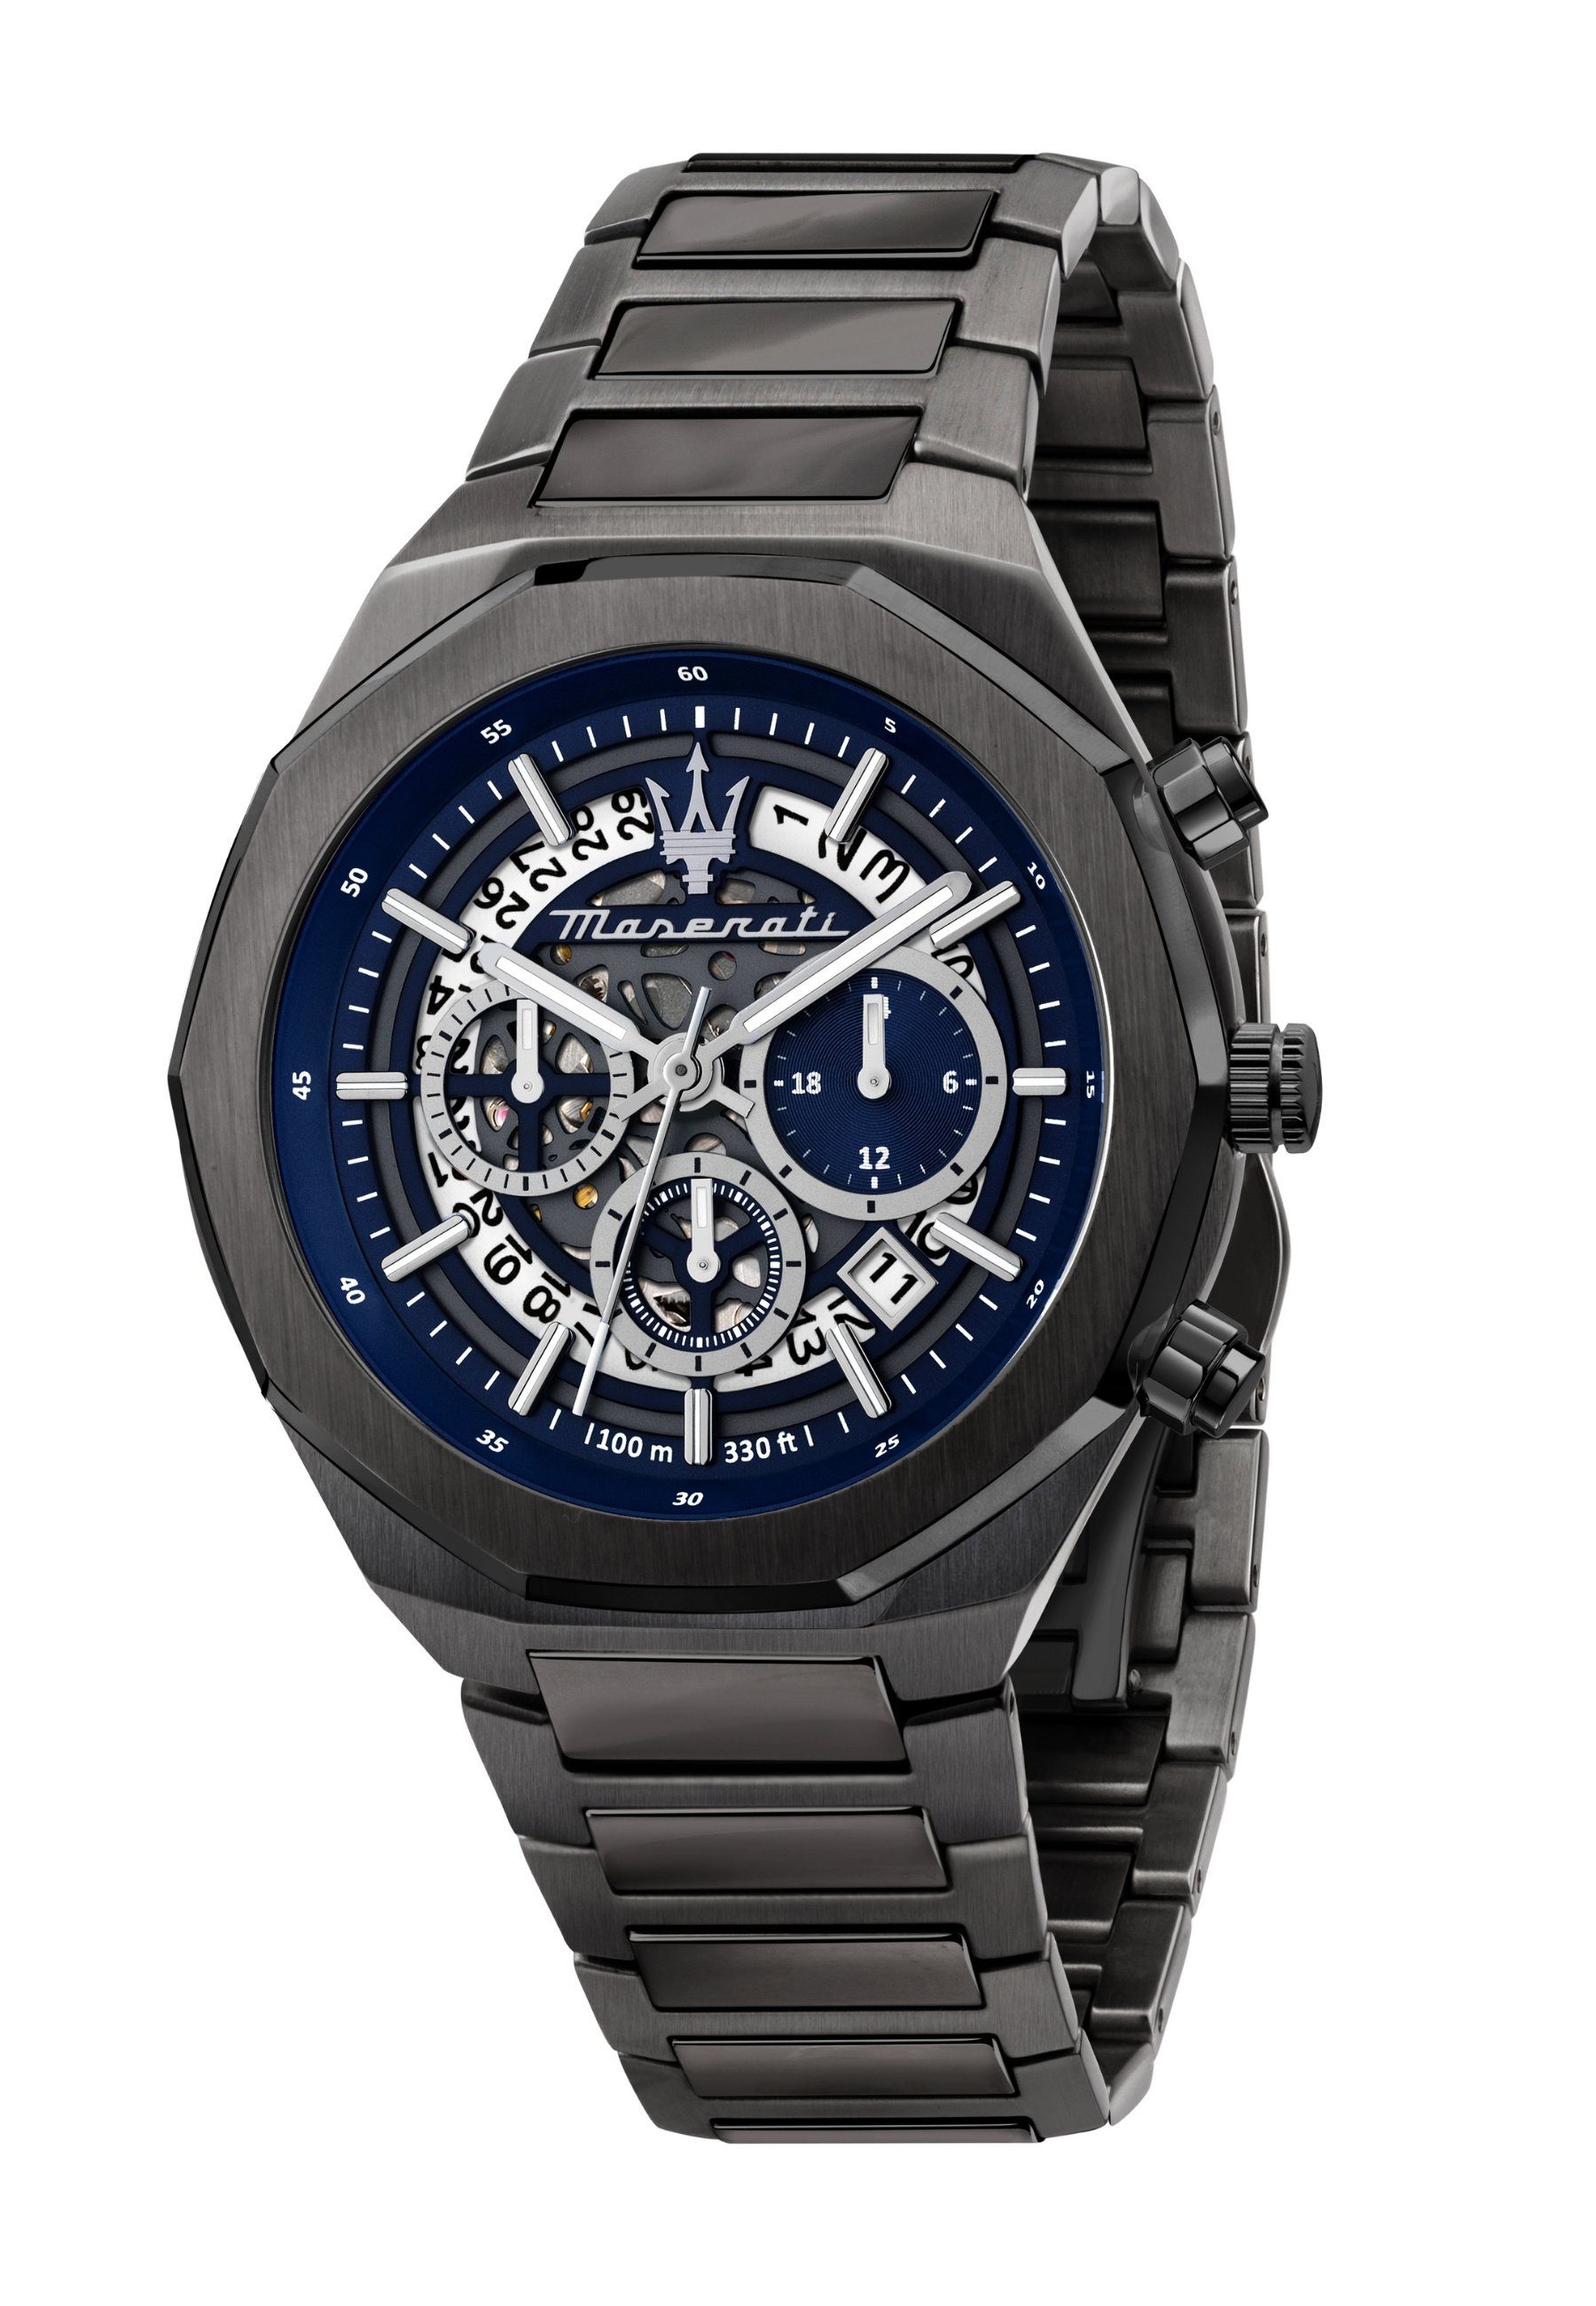 Das Chronograph besonders Armband angenehm Stile, hochwertige modernem Design, aus Maserati mit Edelstahl ist Time